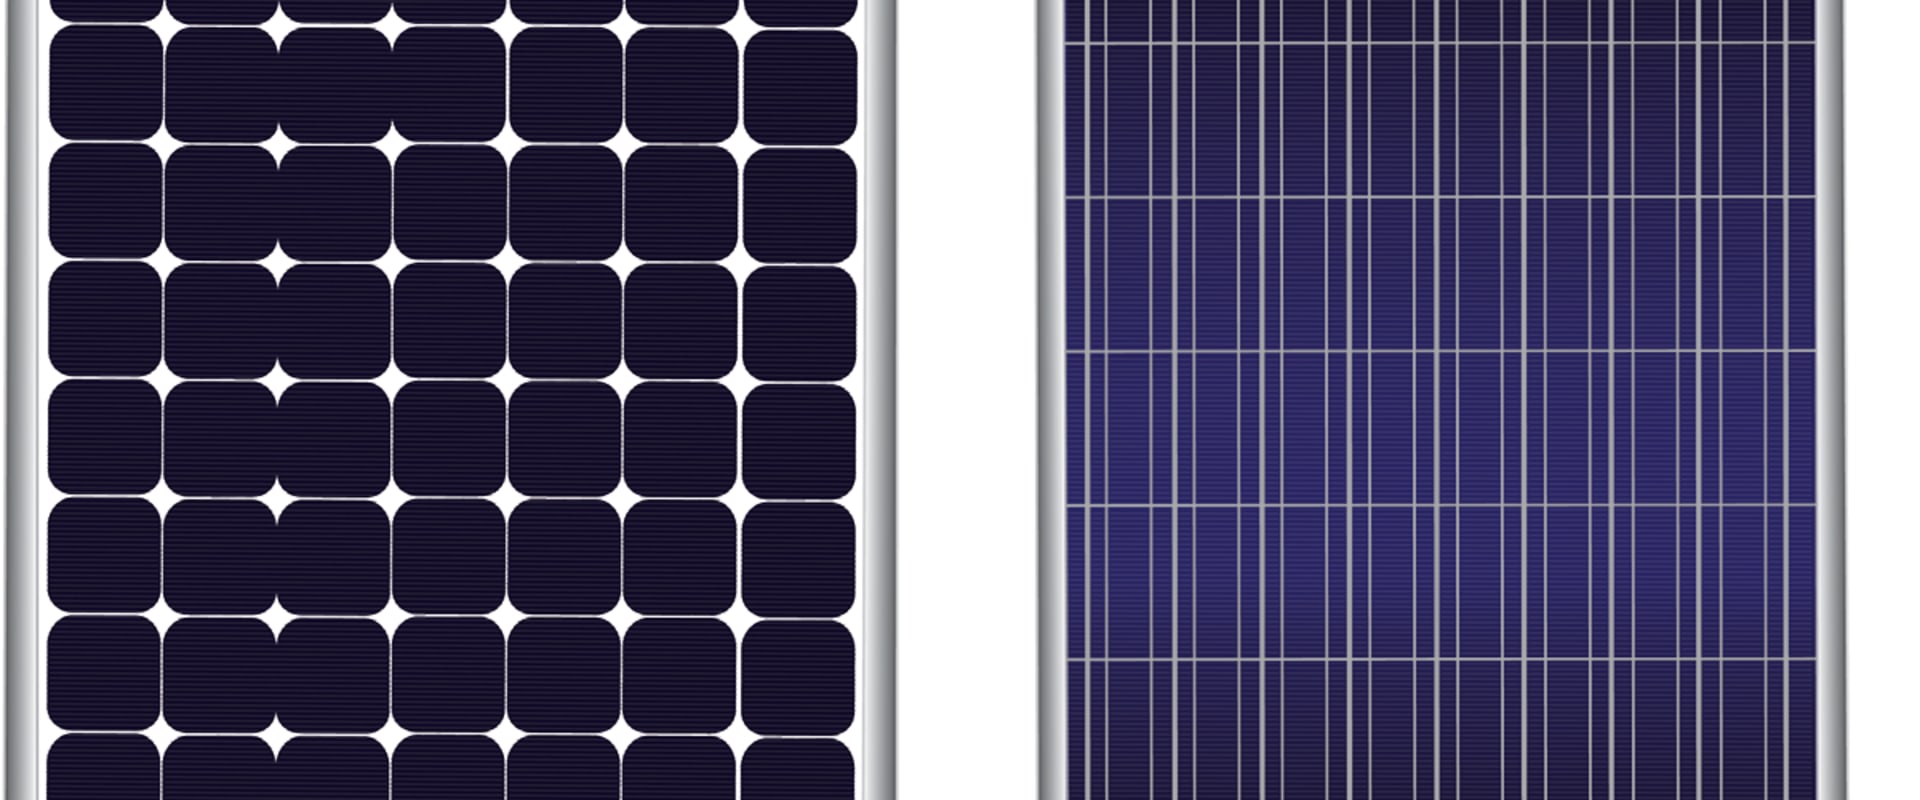 Should I Buy Mono or Poly Solar Panels?